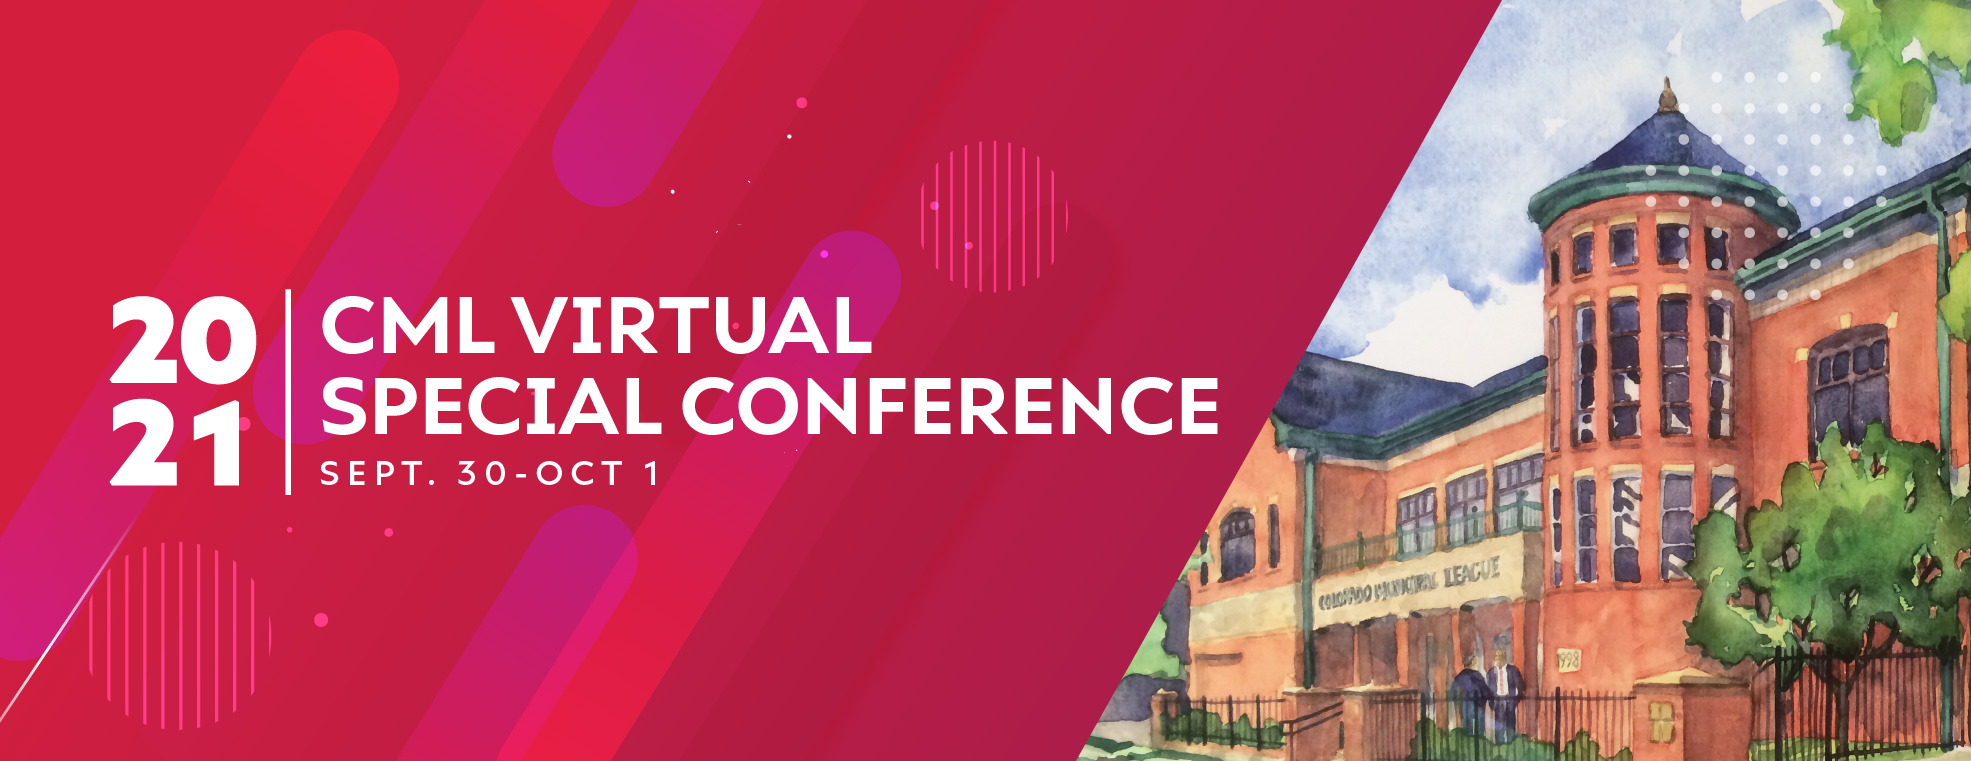 Virtual Conference Program CML